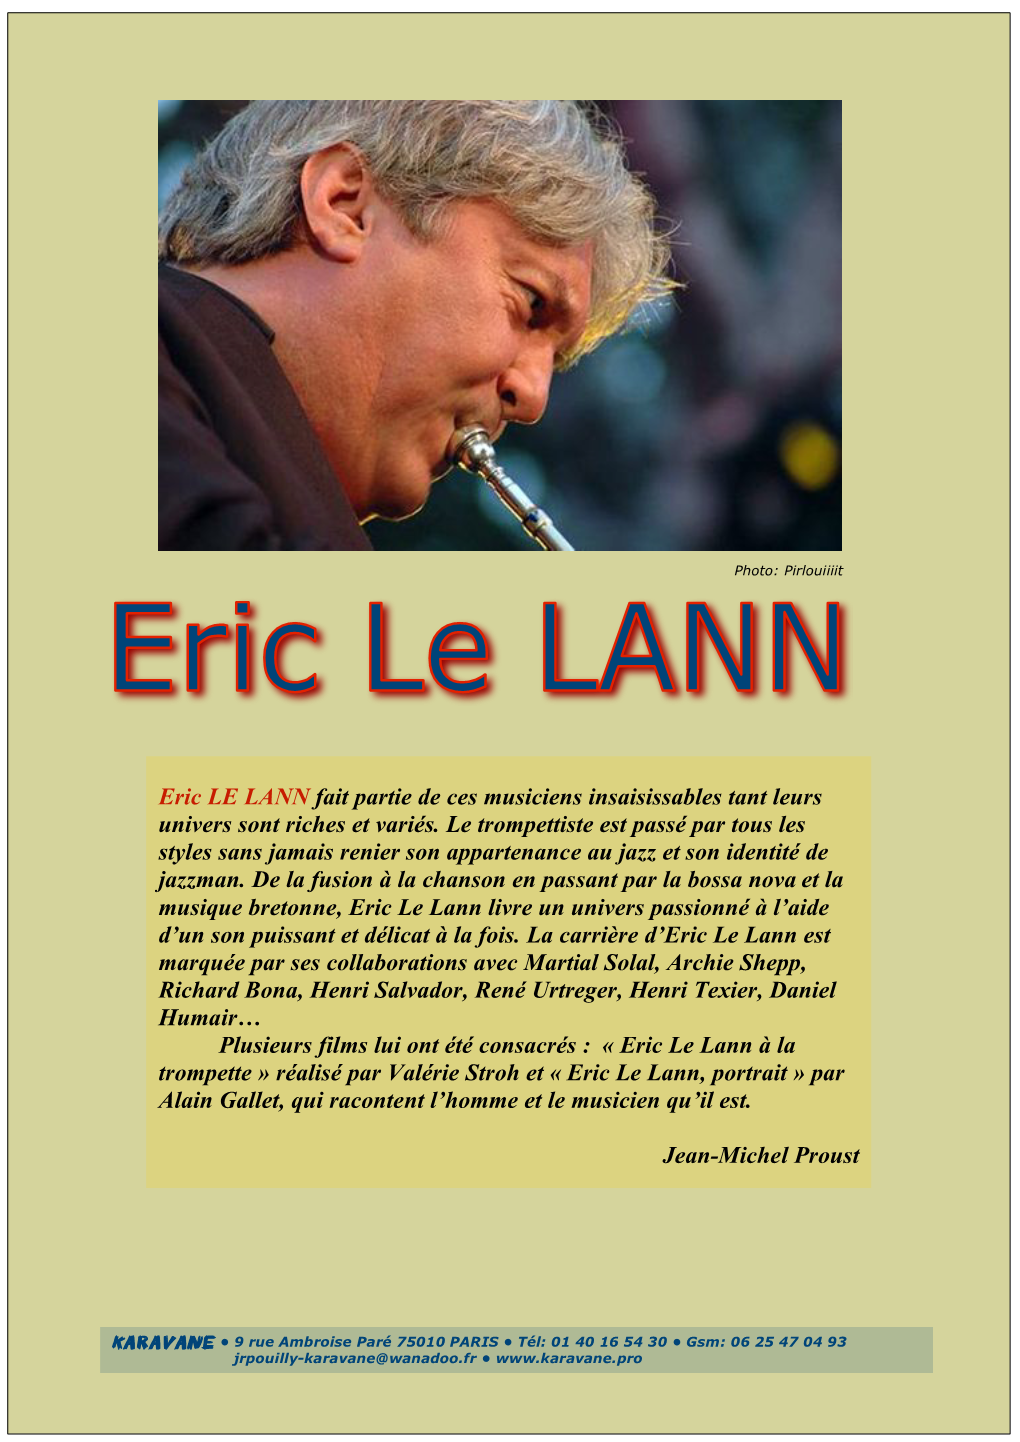 Eric Le Lann – Bio (Fr)